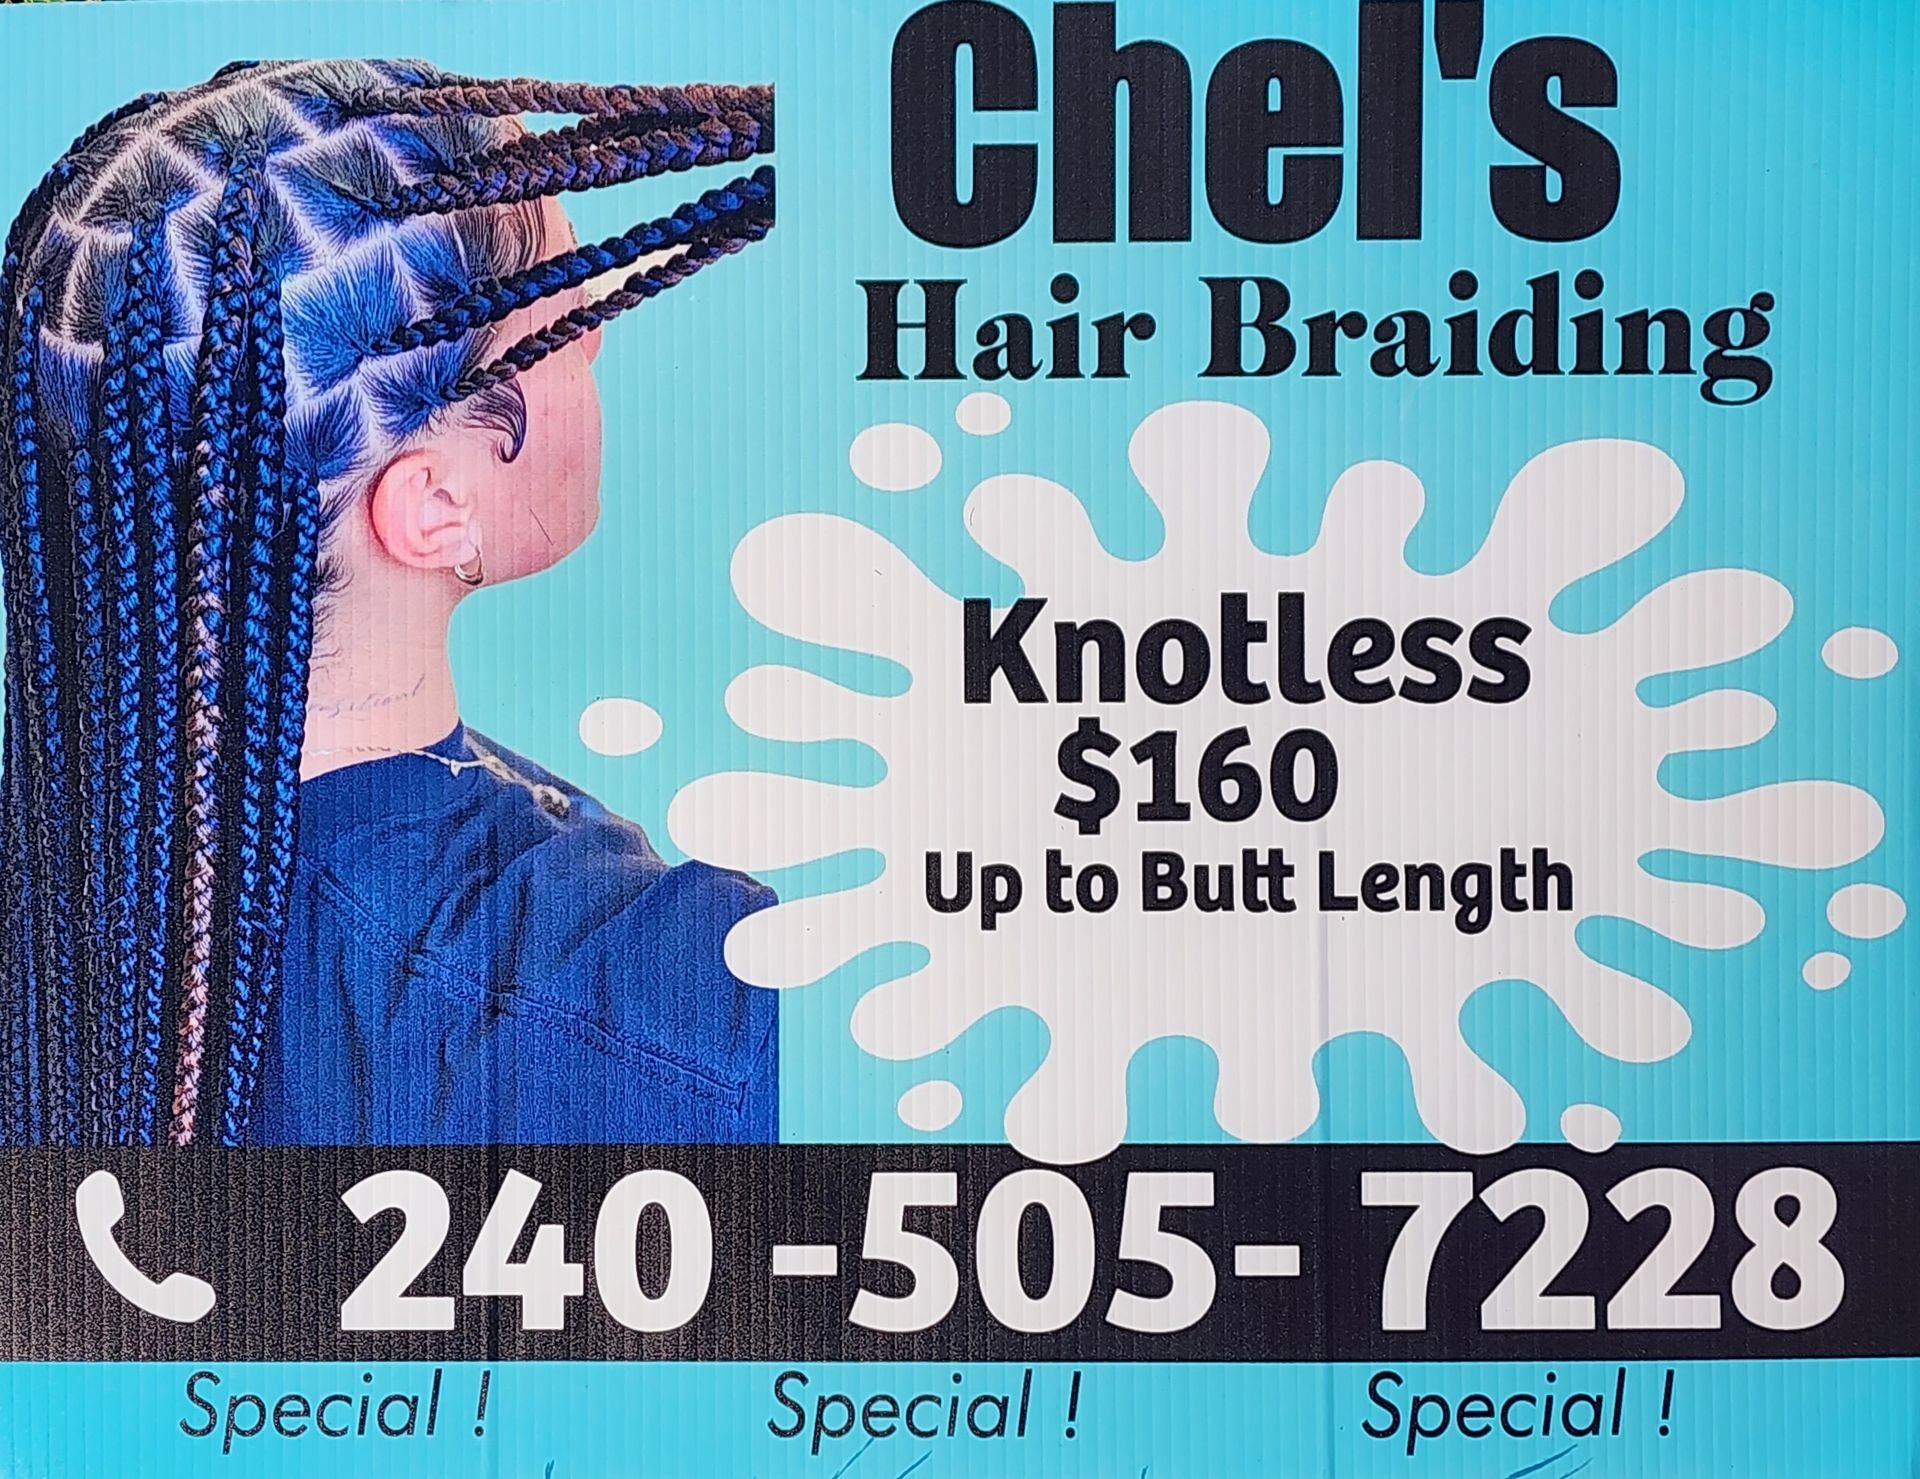 Knotless Hair Braiding - $160